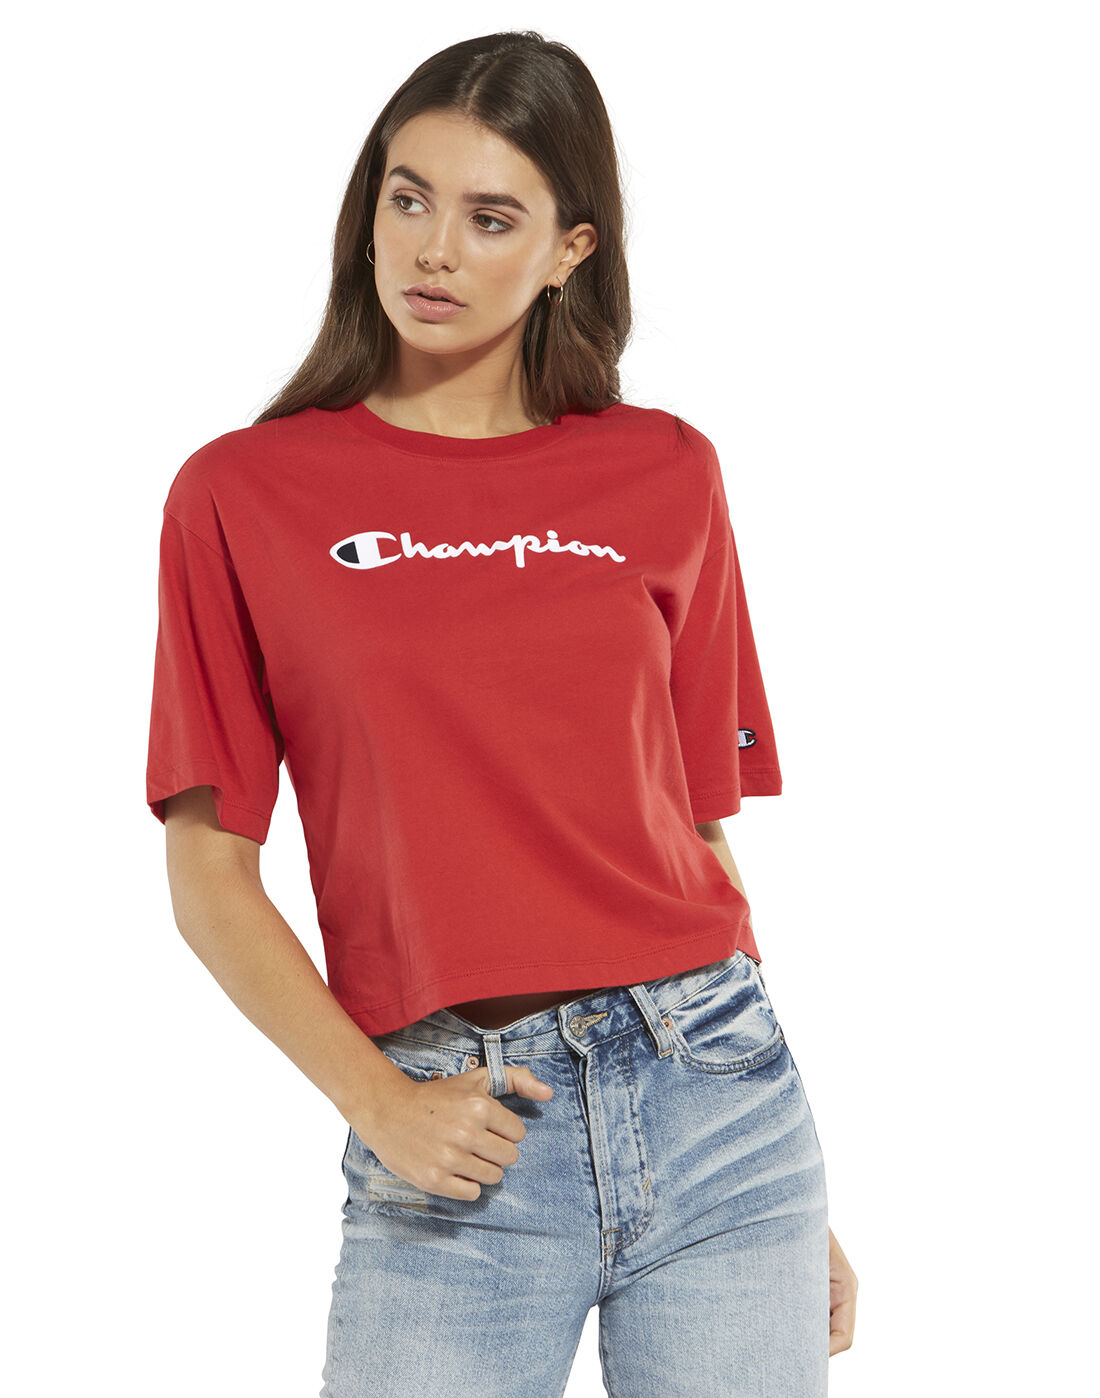 Women's Red Champion T-Shirt | Life 